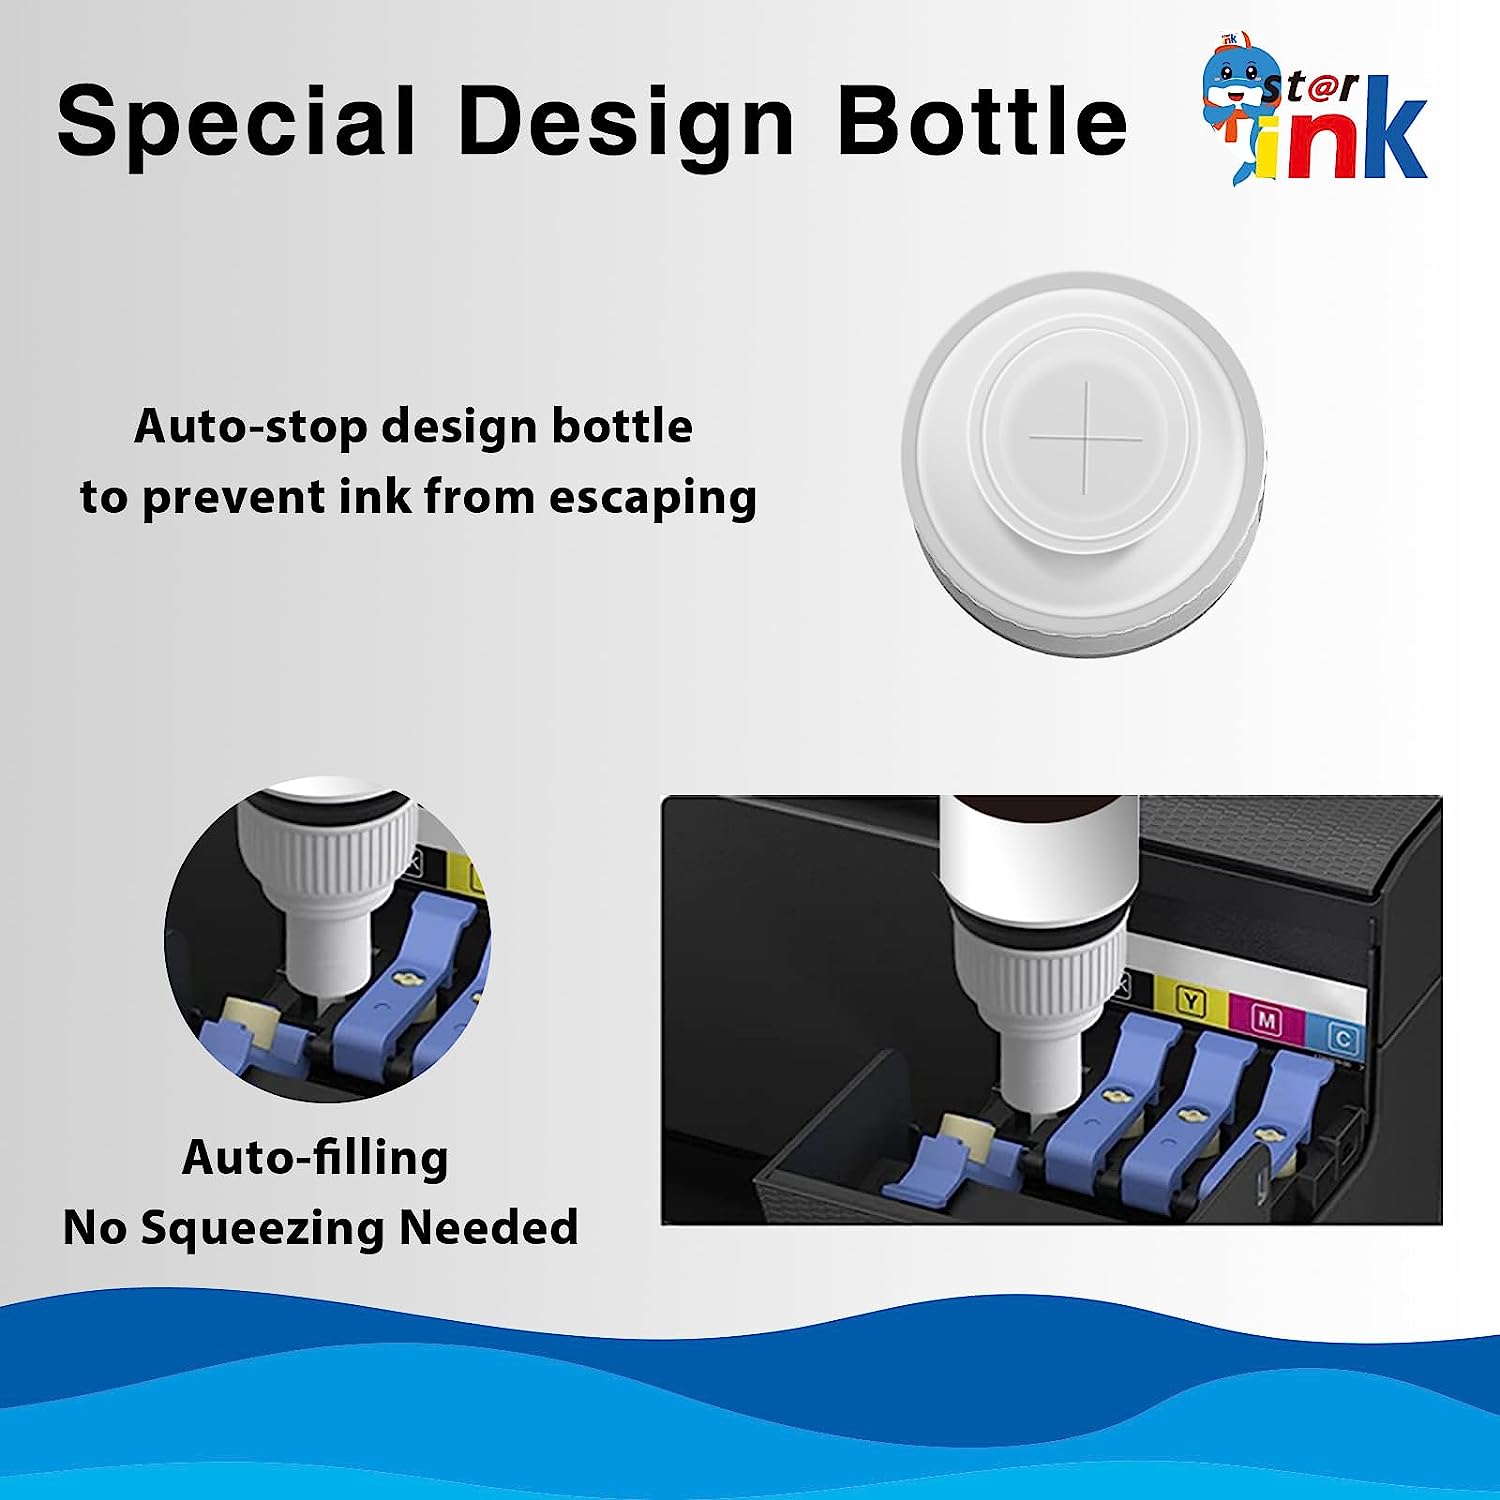 Special design bottle ster ink auto-stop design bottle to prevent ink